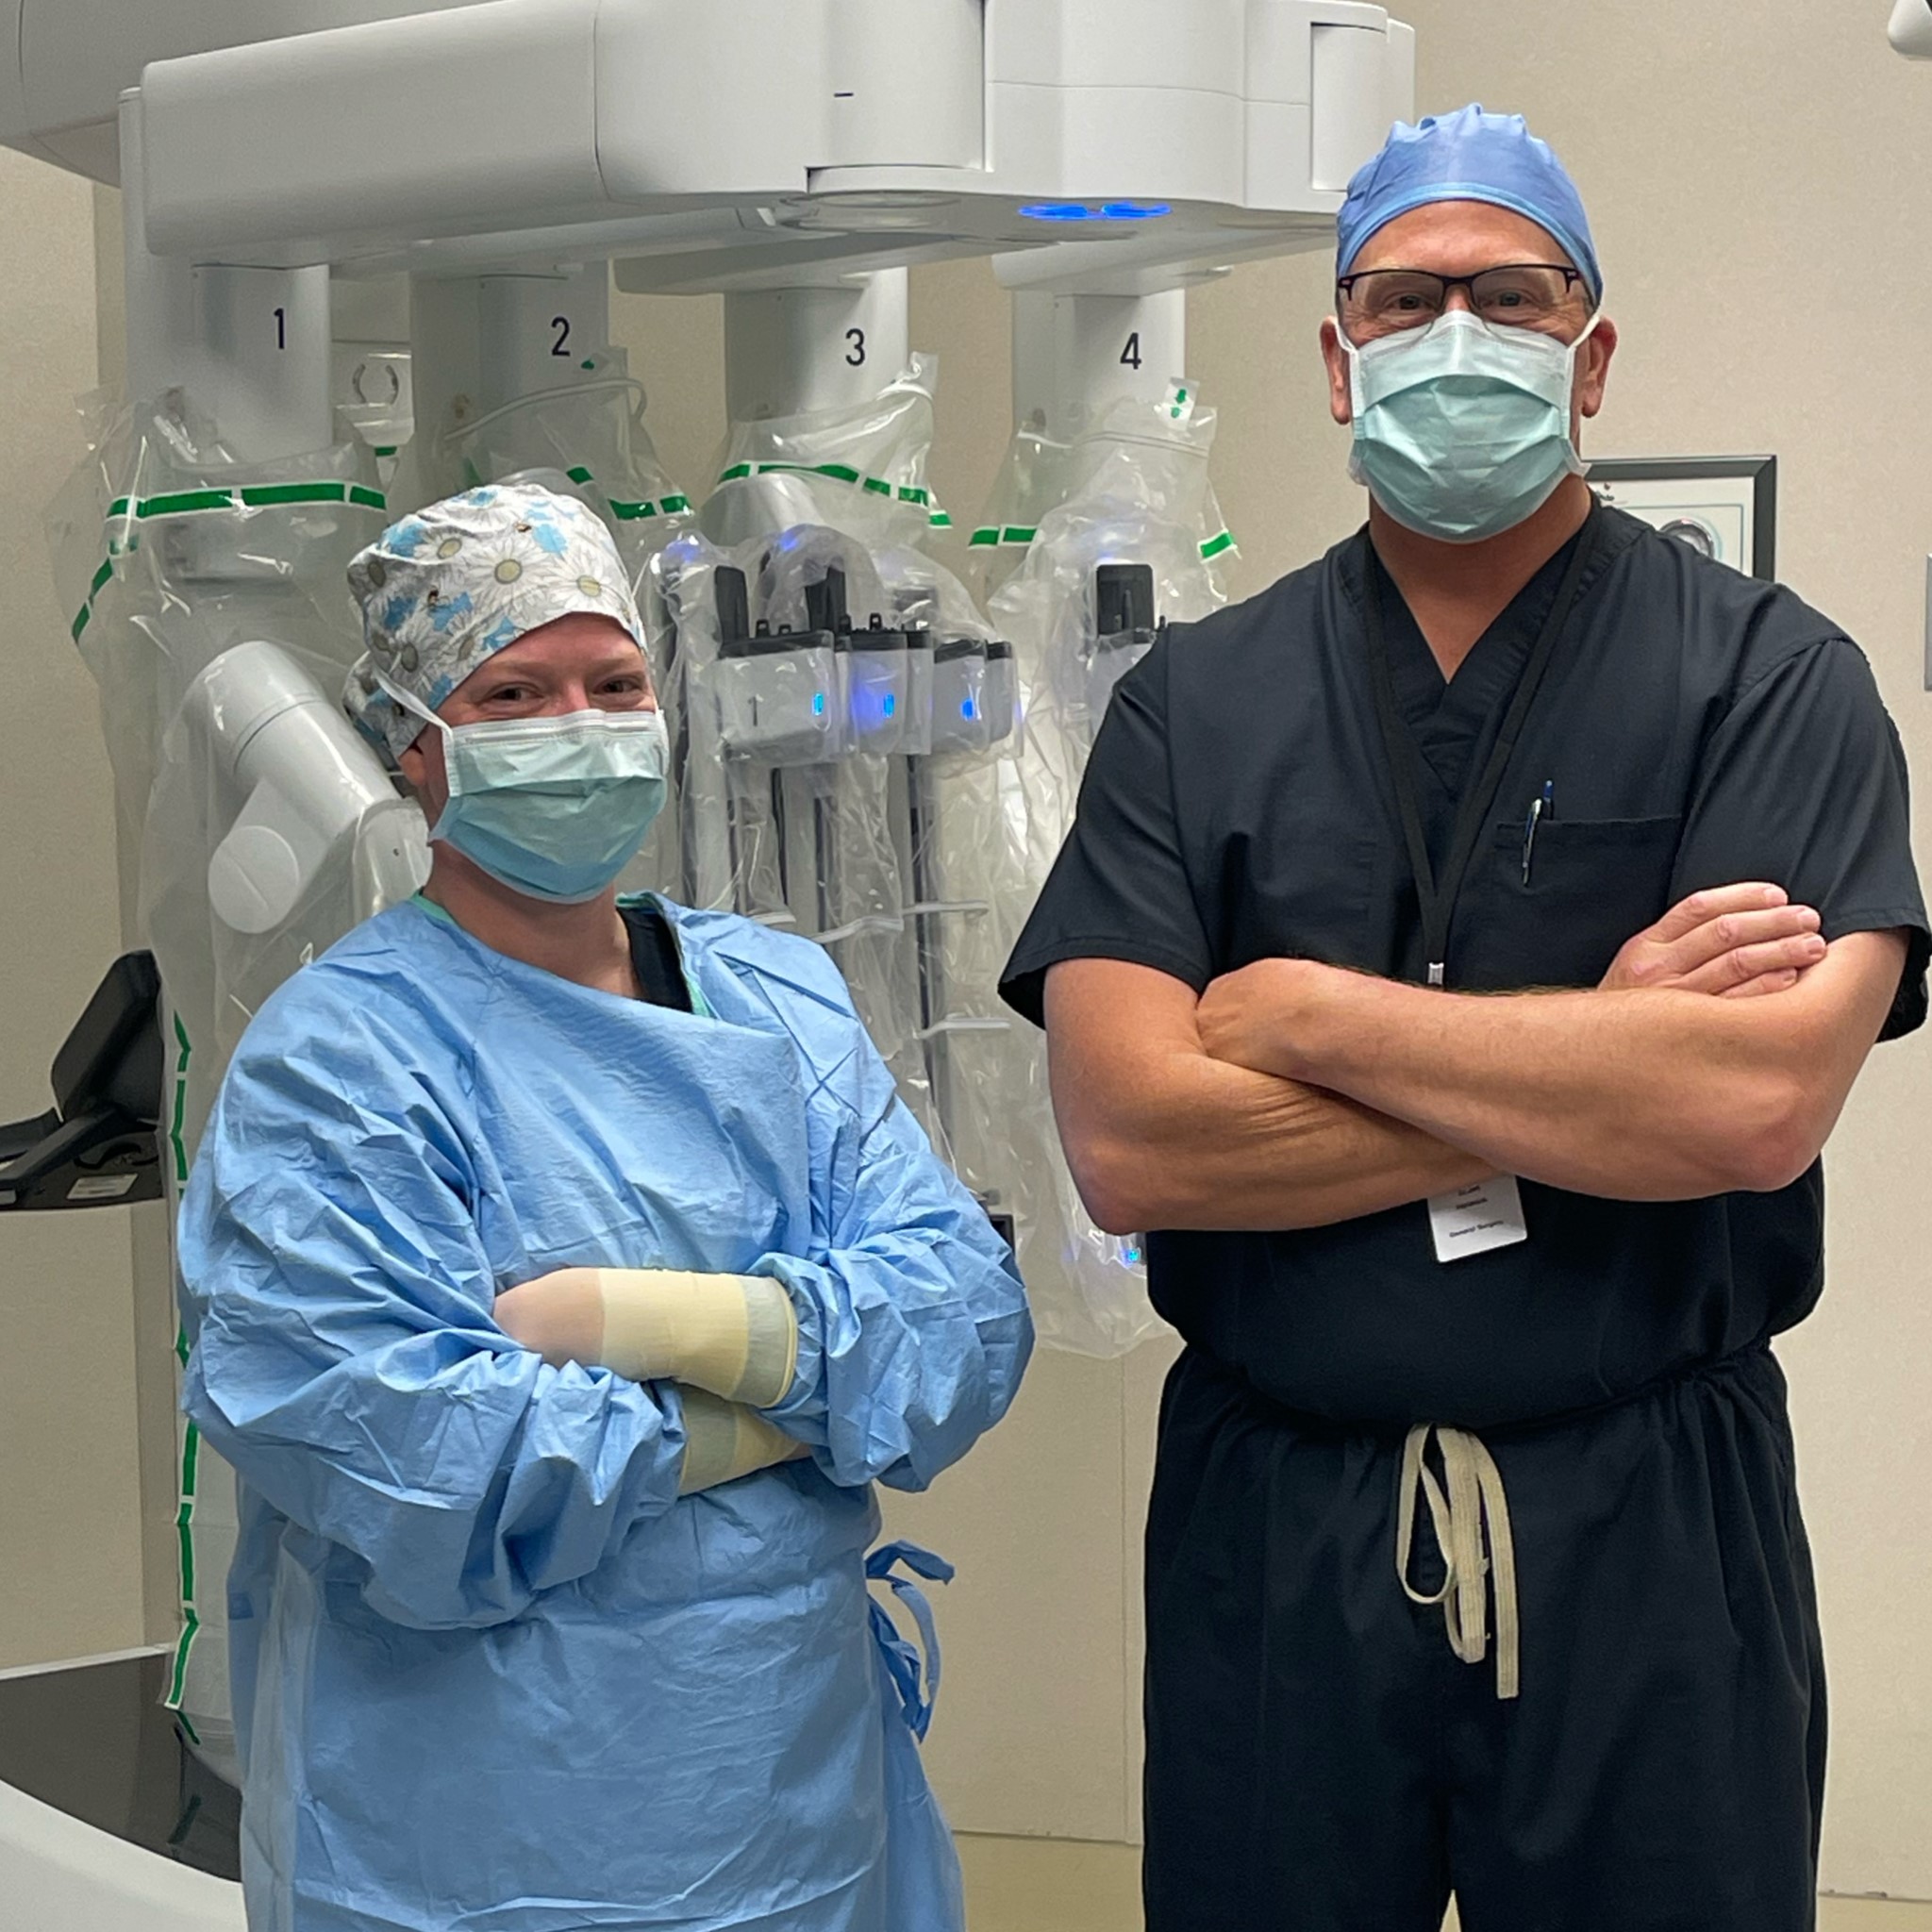 Nurse Carley and Dr. Helmink standing in front of new da Vinci Xi robot